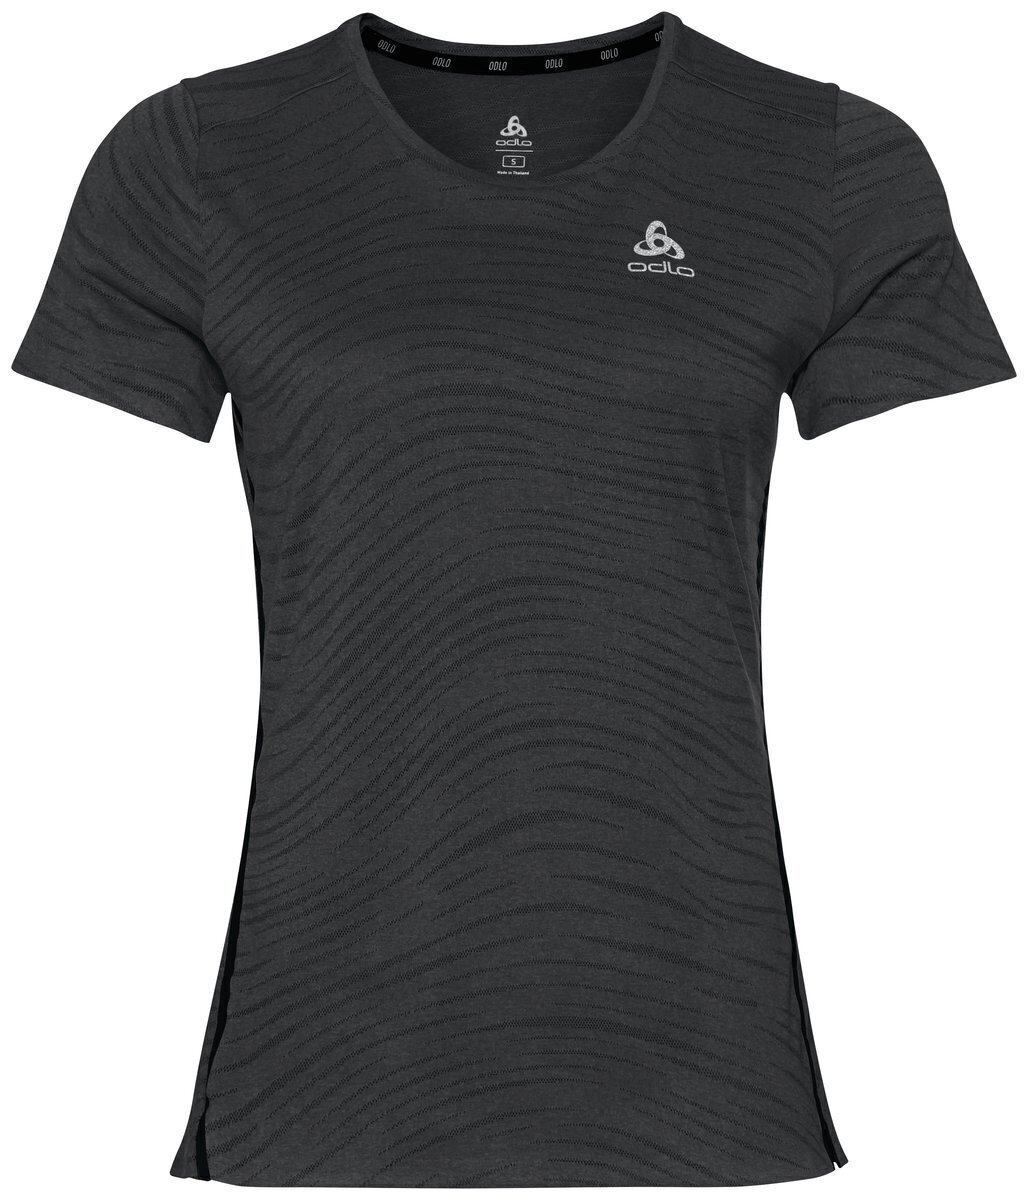 Bežecké tričko s krátkym rukávom
 Odlo Zeroweight Engineered Chill-Tec T-Shirt Black Melange XS Bežecké tričko s krátkym rukávom